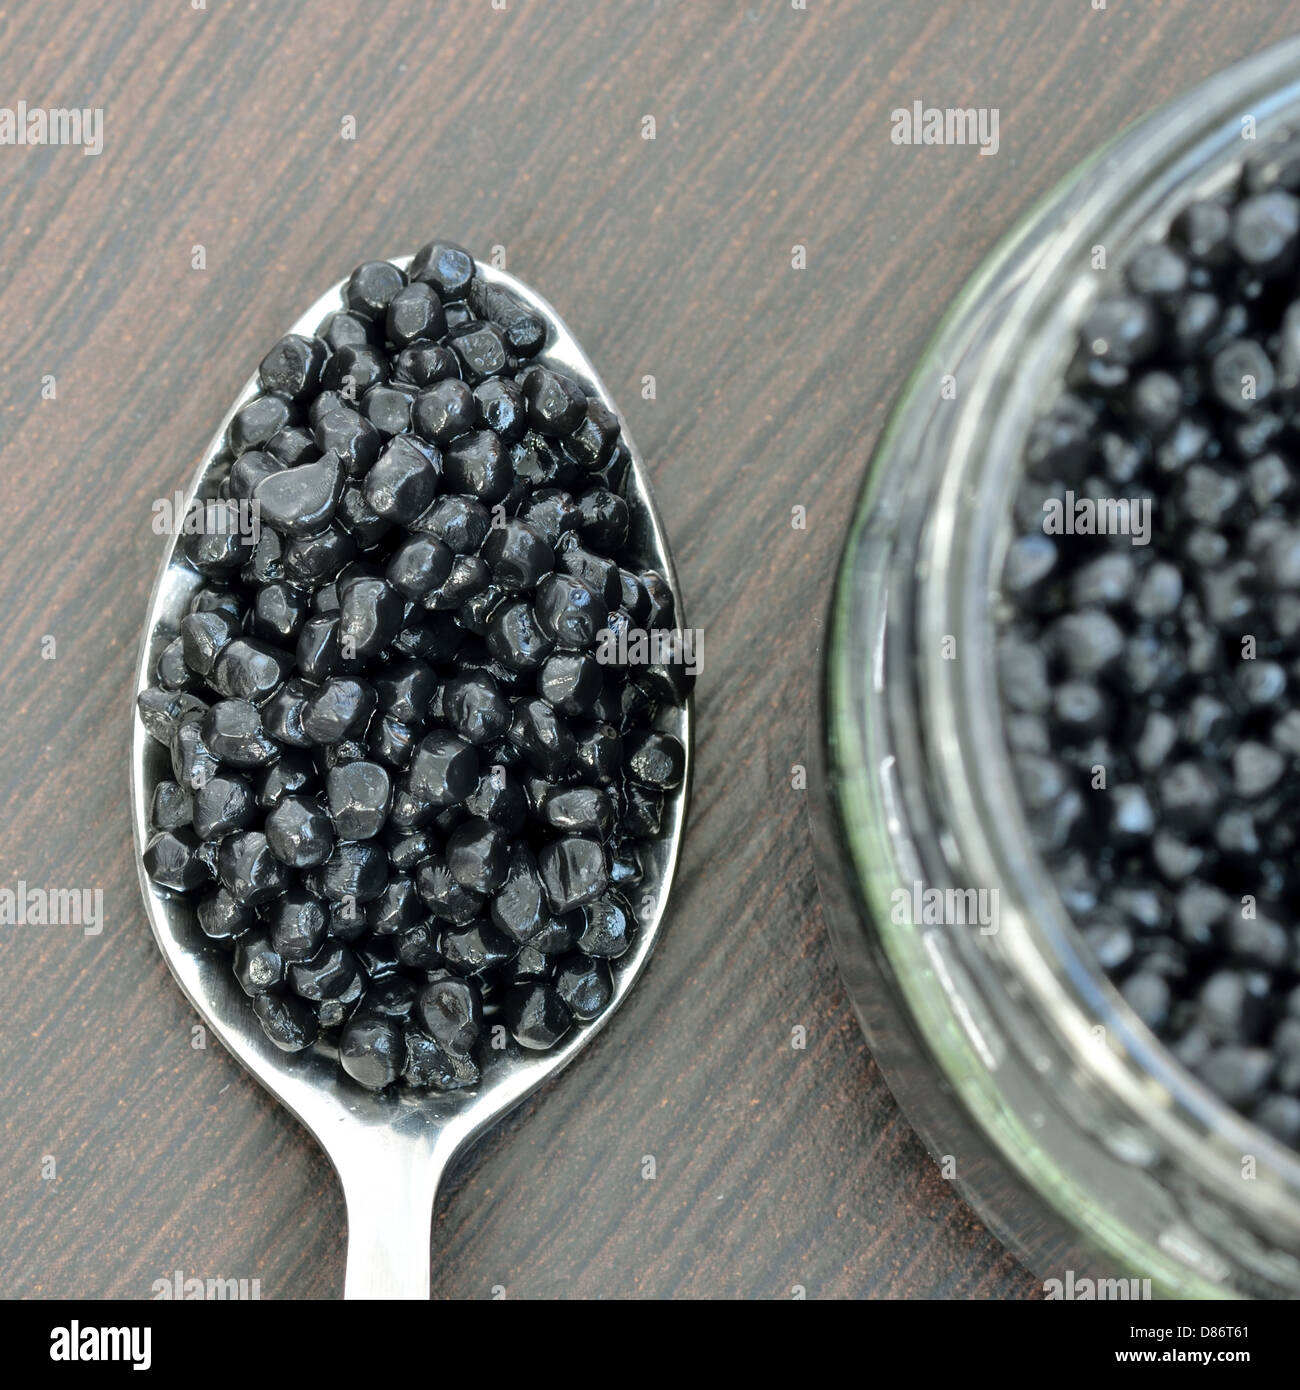 Black caviar on a spoon Stock Photo